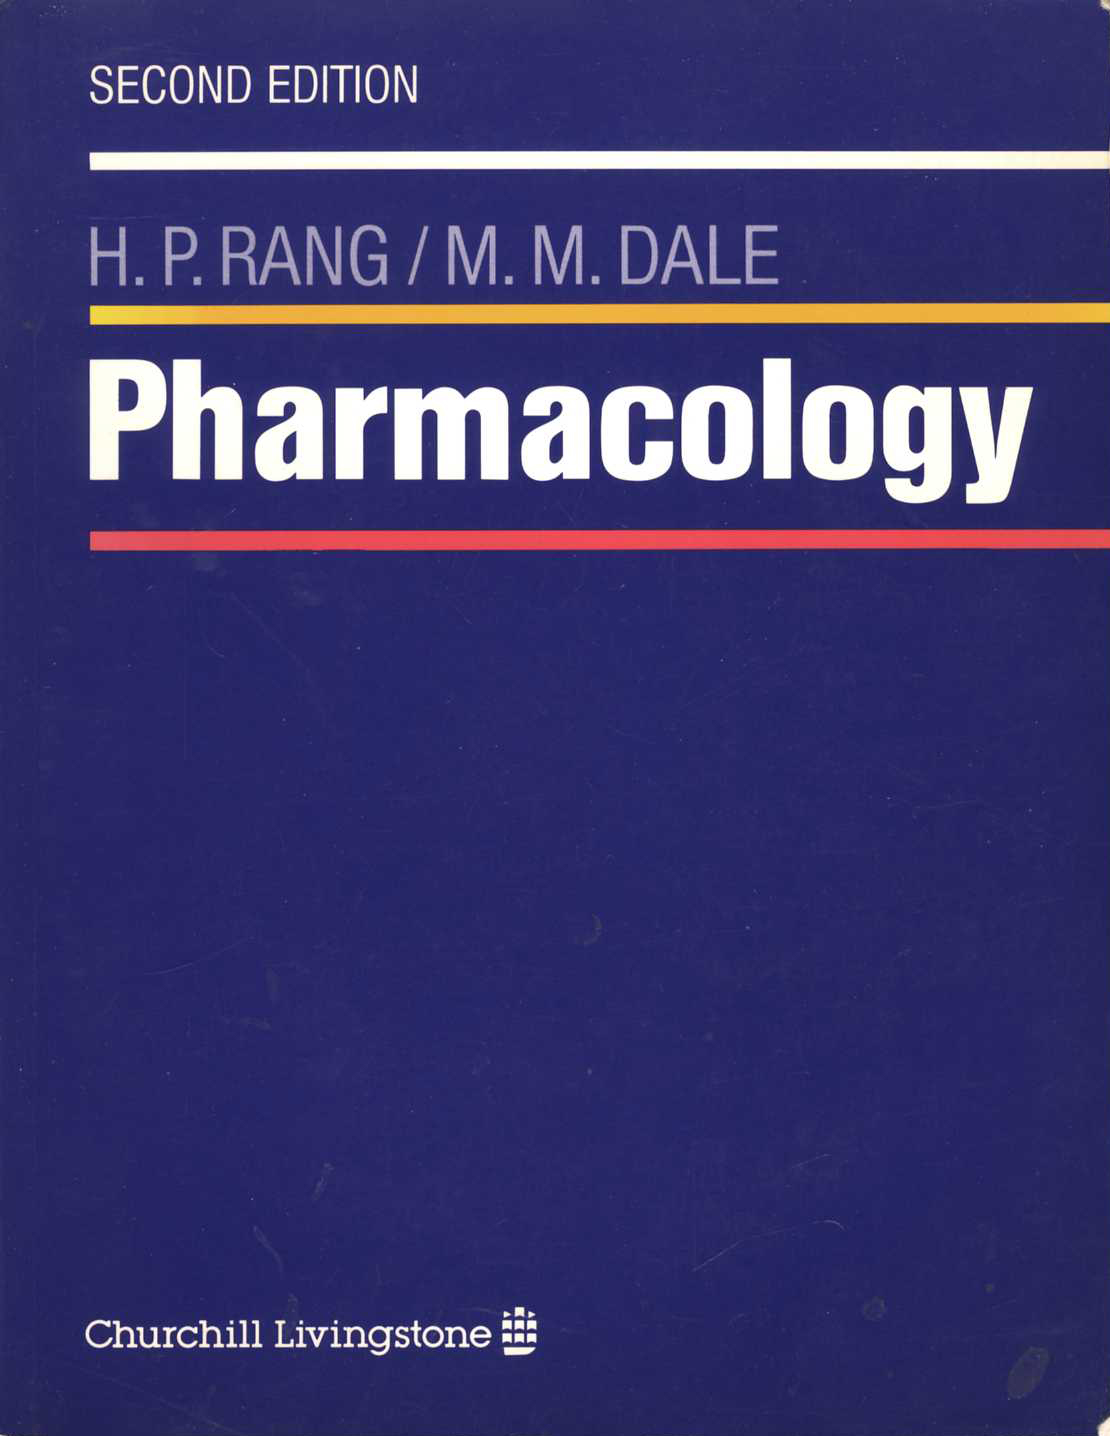 Pharmacology (H. P. Rang, M. M. Dale)